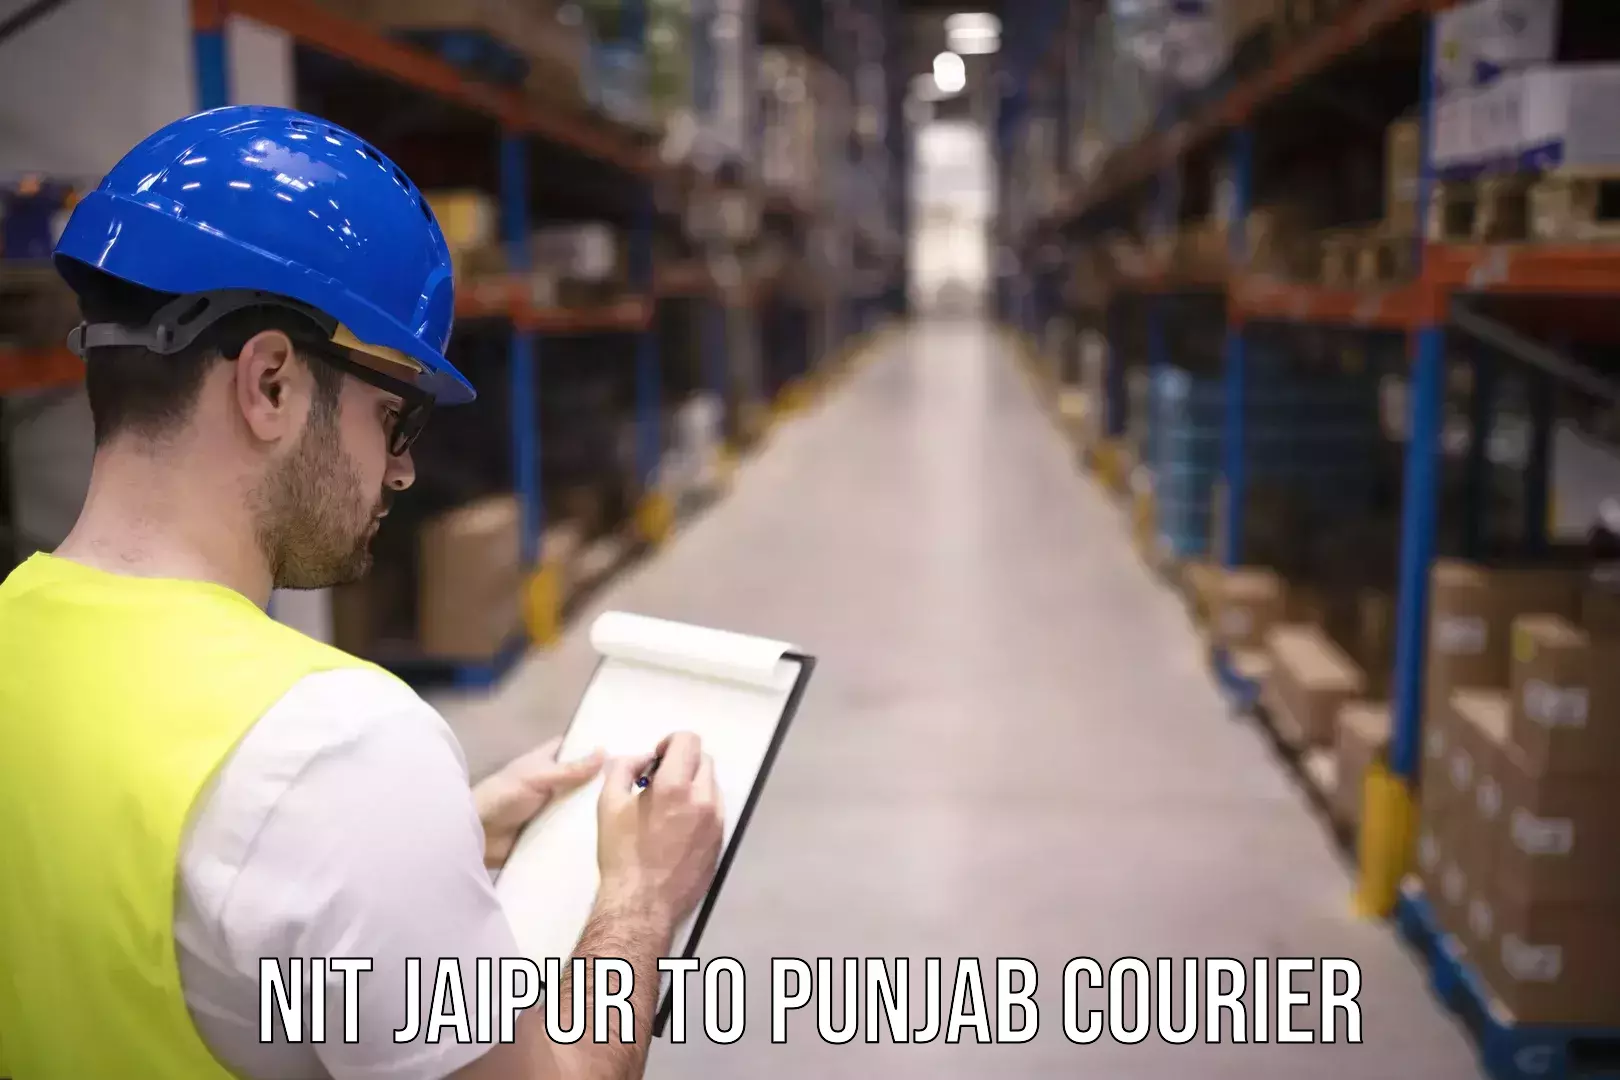 Courier services NIT Jaipur to Punjab